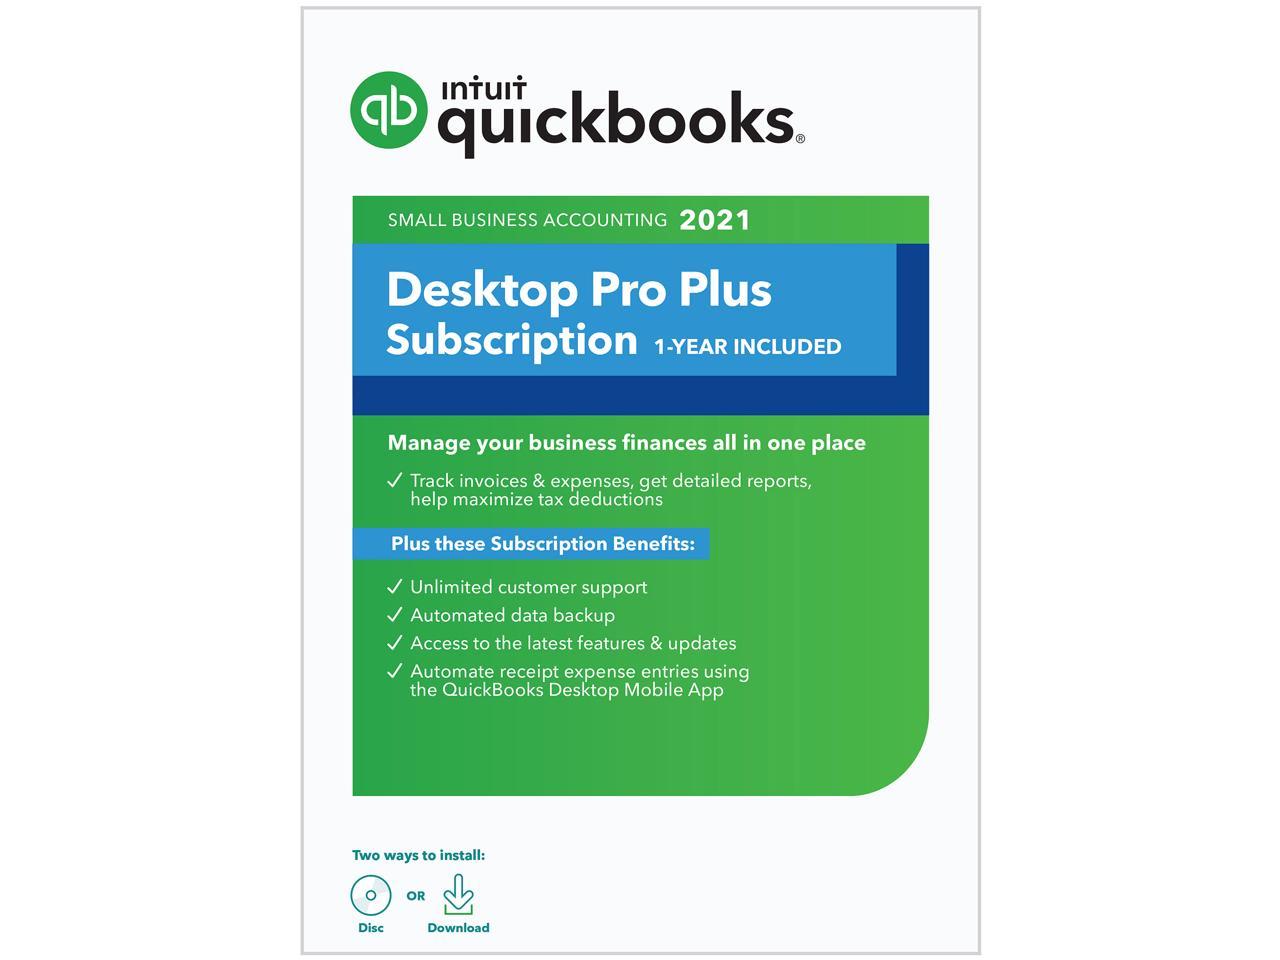 quickbooks software